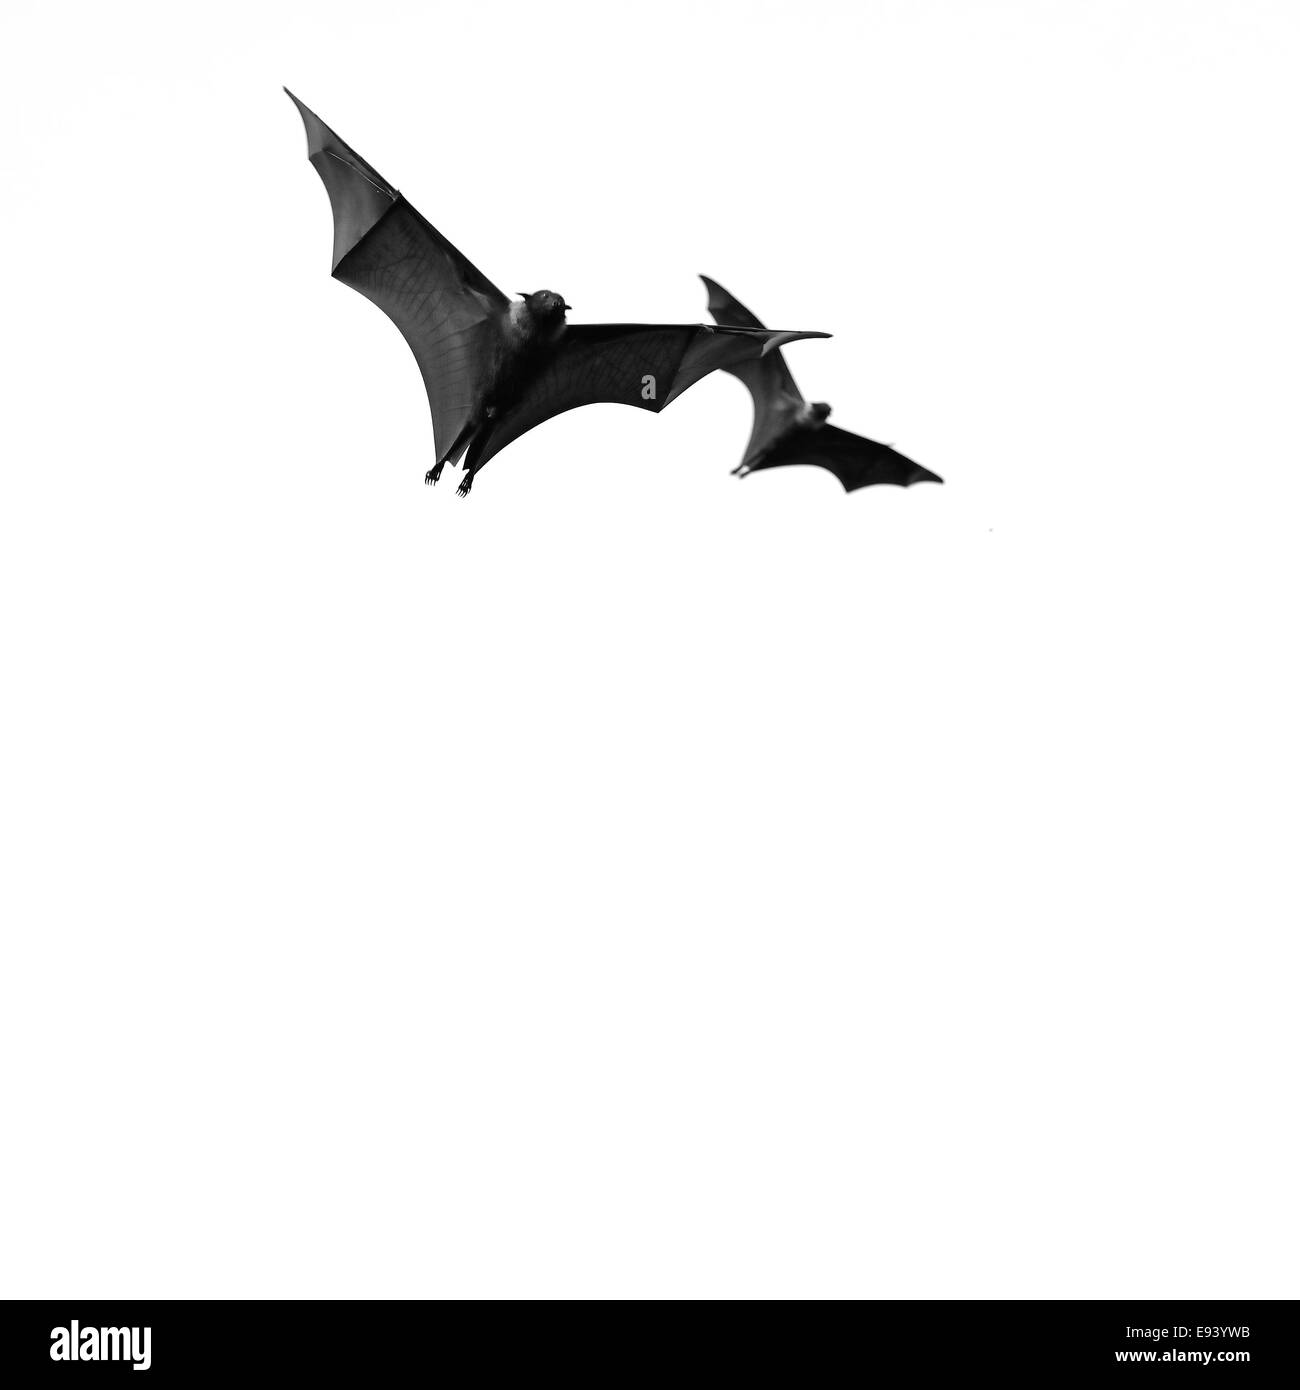 Grande Bat, appeso Flying Fox (Pteropus vampyrus) in bianco e nero Foto Stock